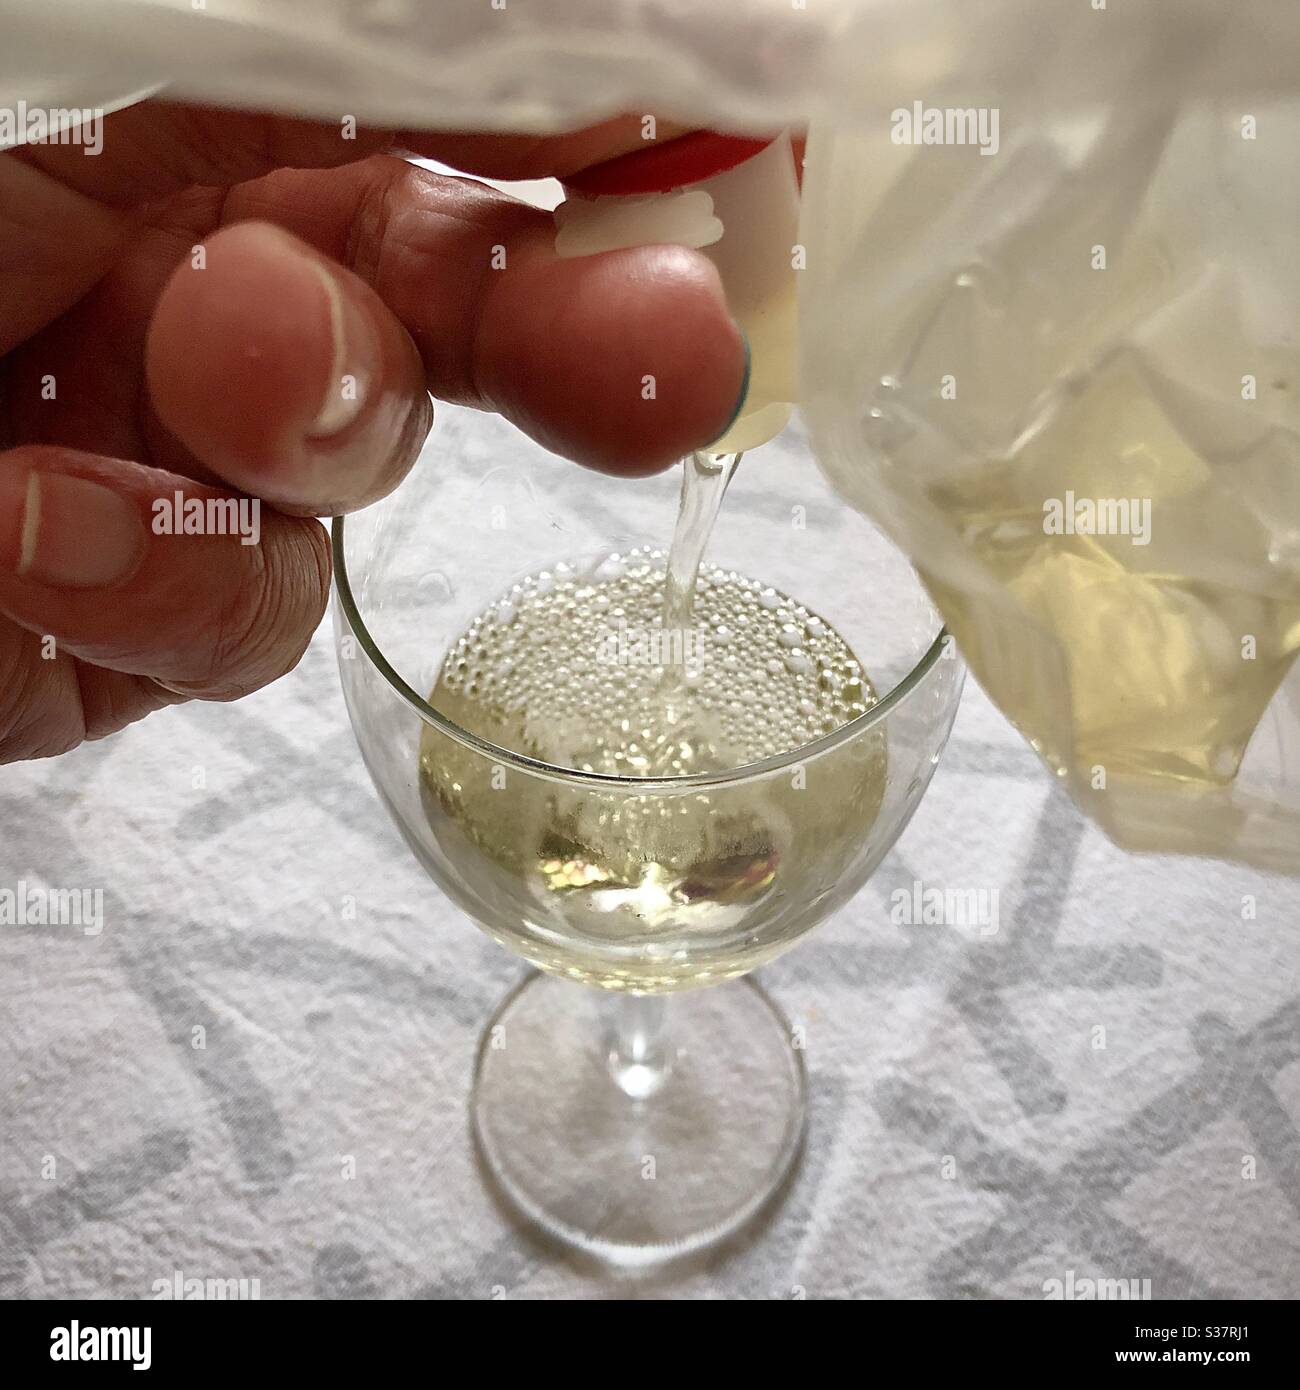 Verter las últimas gotas de vino blanco de la bolsa de plástico de la caja de vino. Foto de stock